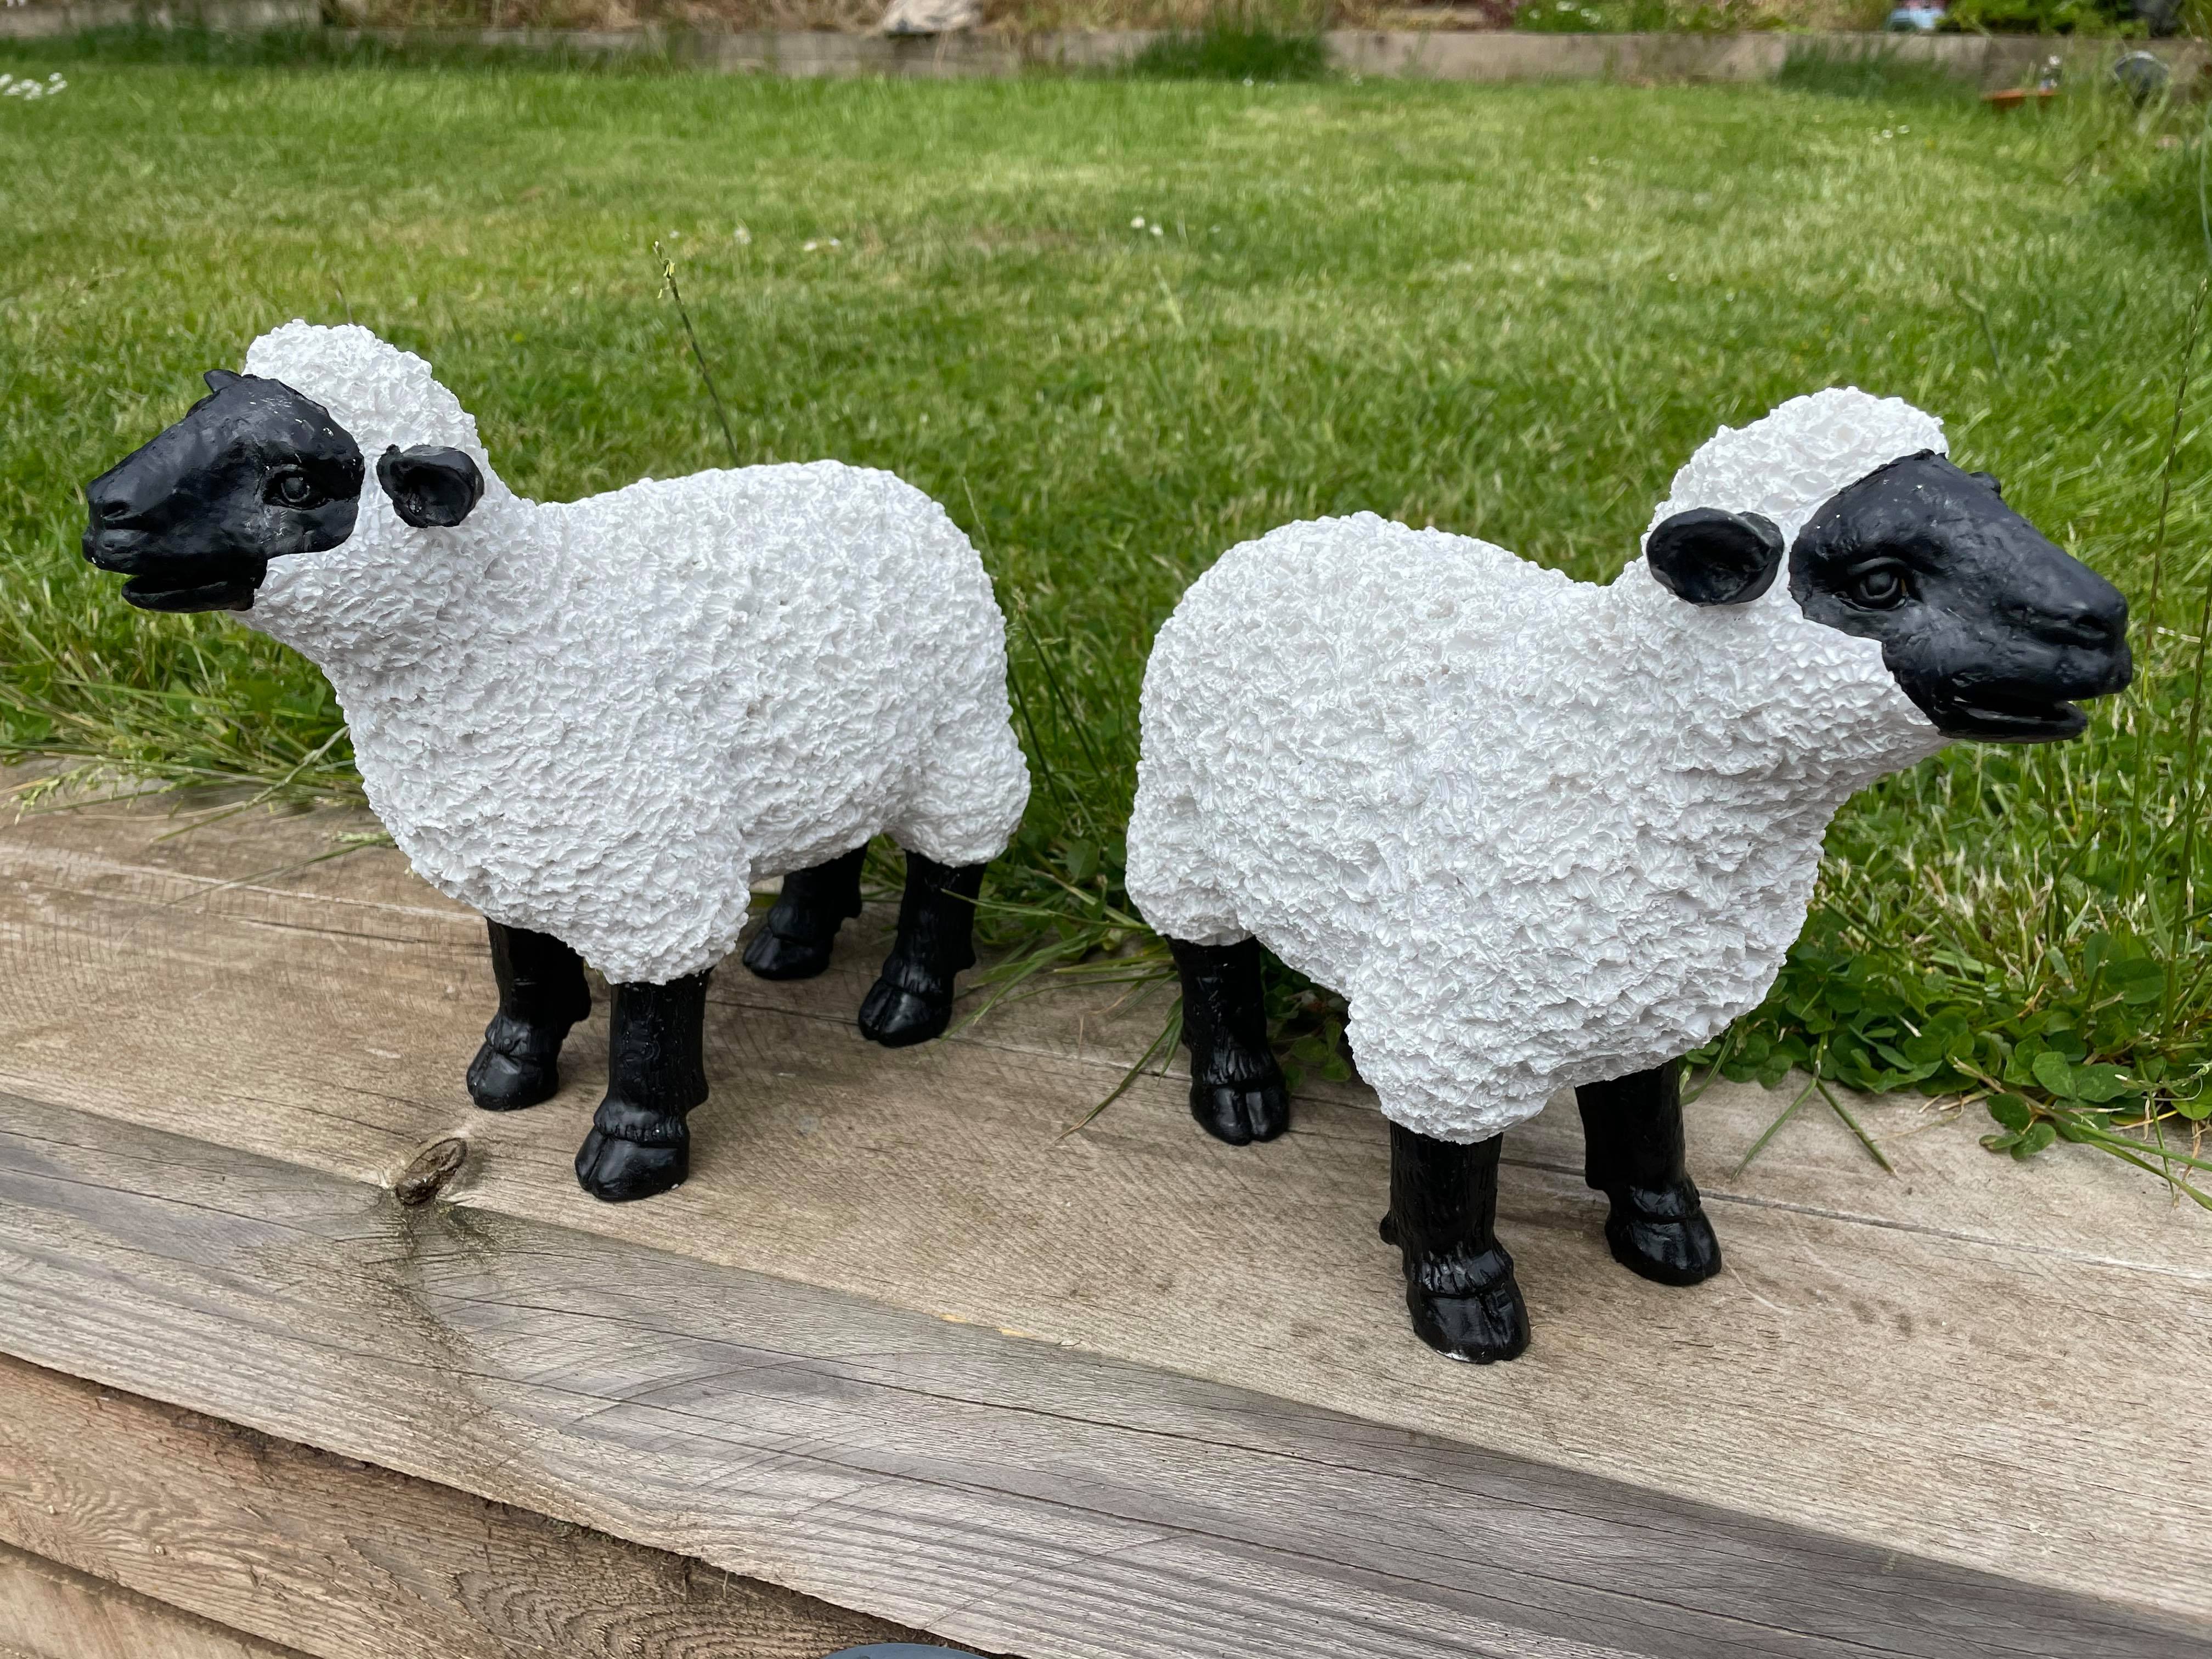 Lovely Lambs